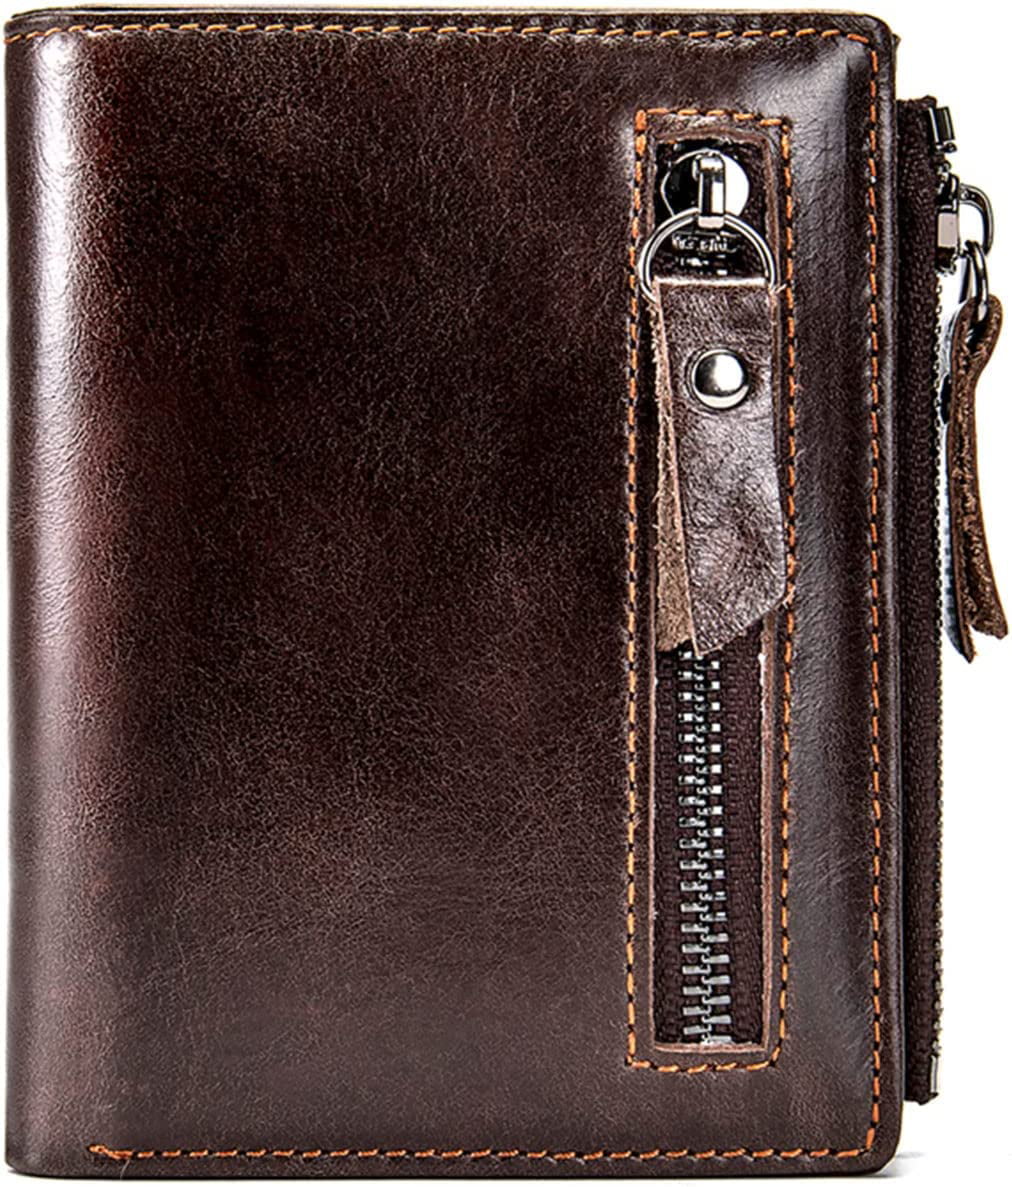 Cuekondy Mens Leather Bifold Wallet Business ID Credit Card Holder Purse Pockets Slim Single Fold Bifold Leather Wallet 